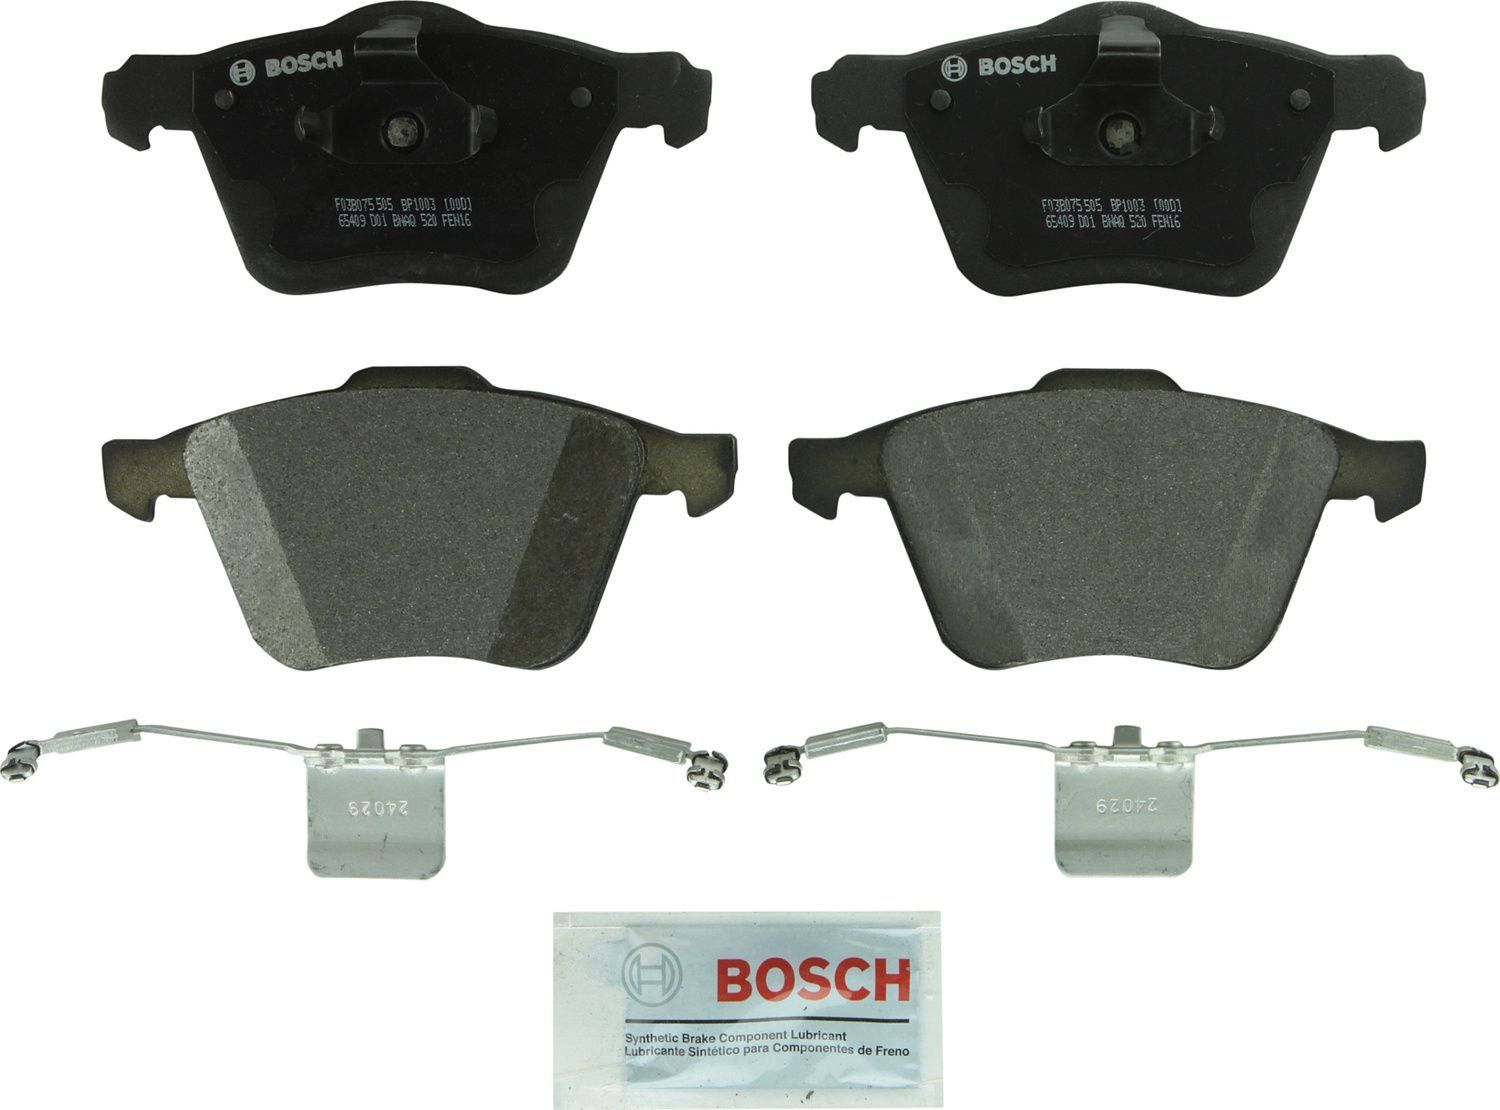 BOSCH BRAKE - Bosch QuietCast Semi-Metallic Brake Pads (Front) - BQC BP1003